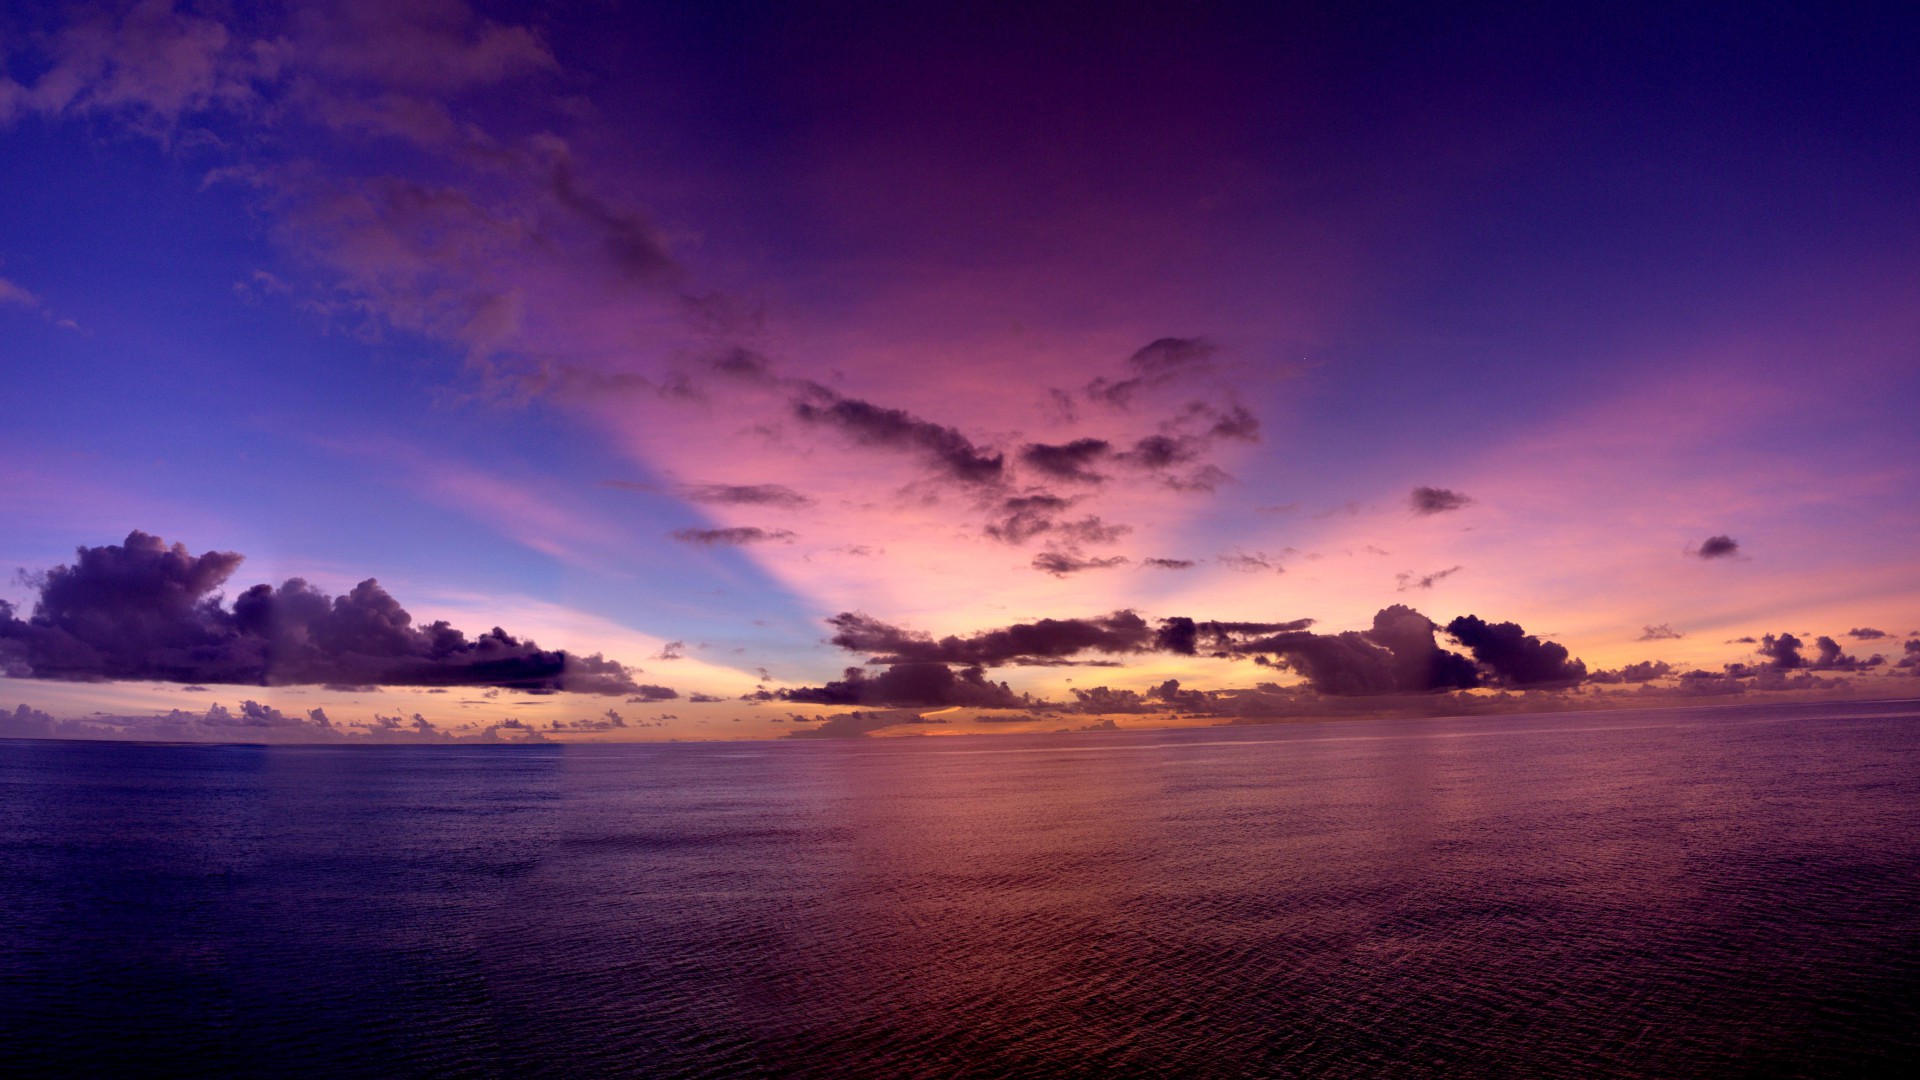 Тихий океан, 5k, 4k, закат, фиолетовый, лучи, облака, Pacific ocean, 5k, 4k wallpaper, sunset, purple, rays, clouds (horizontal)